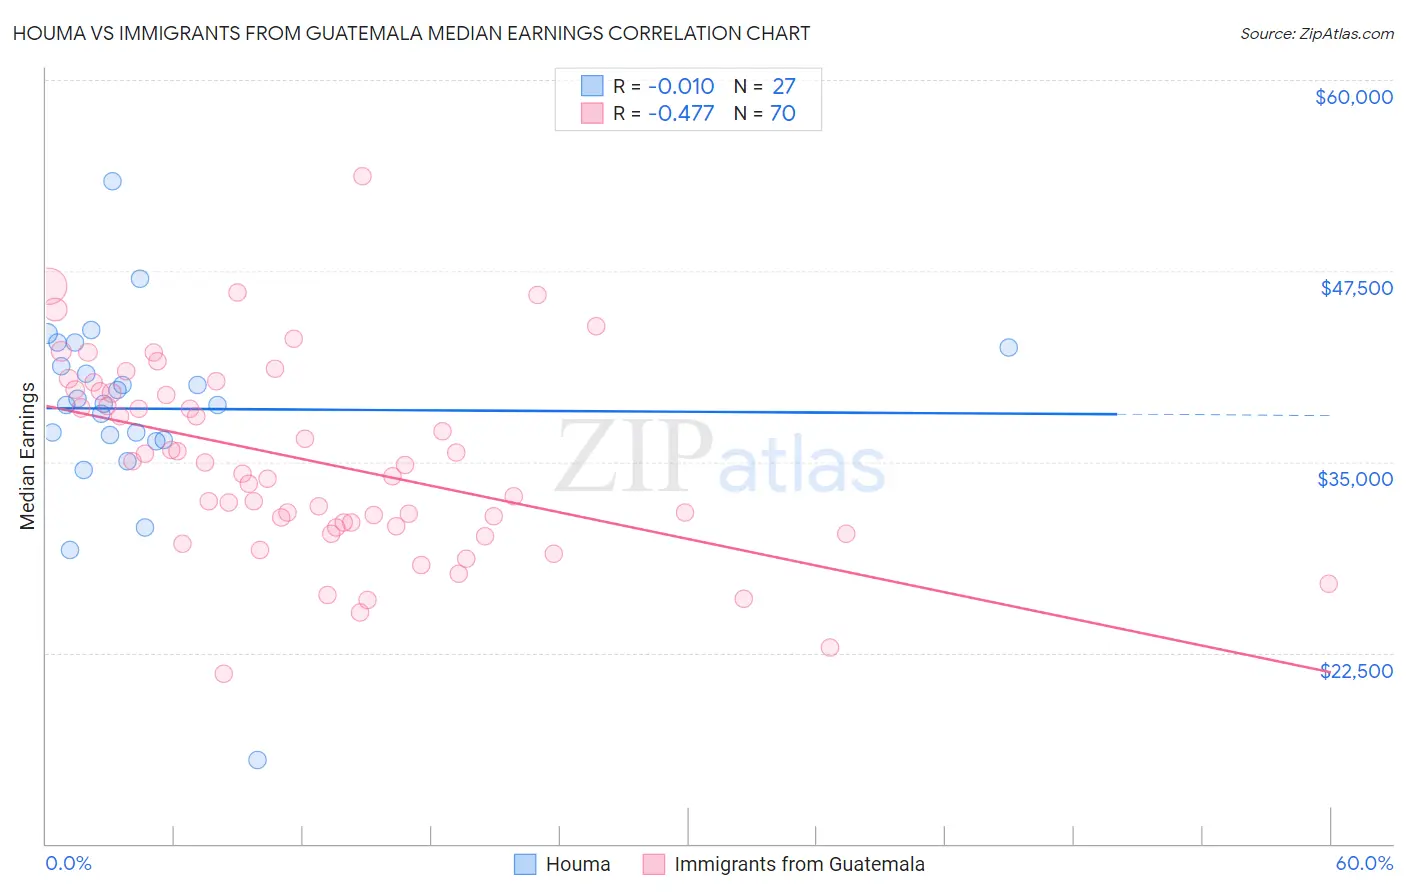 Houma vs Immigrants from Guatemala Median Earnings